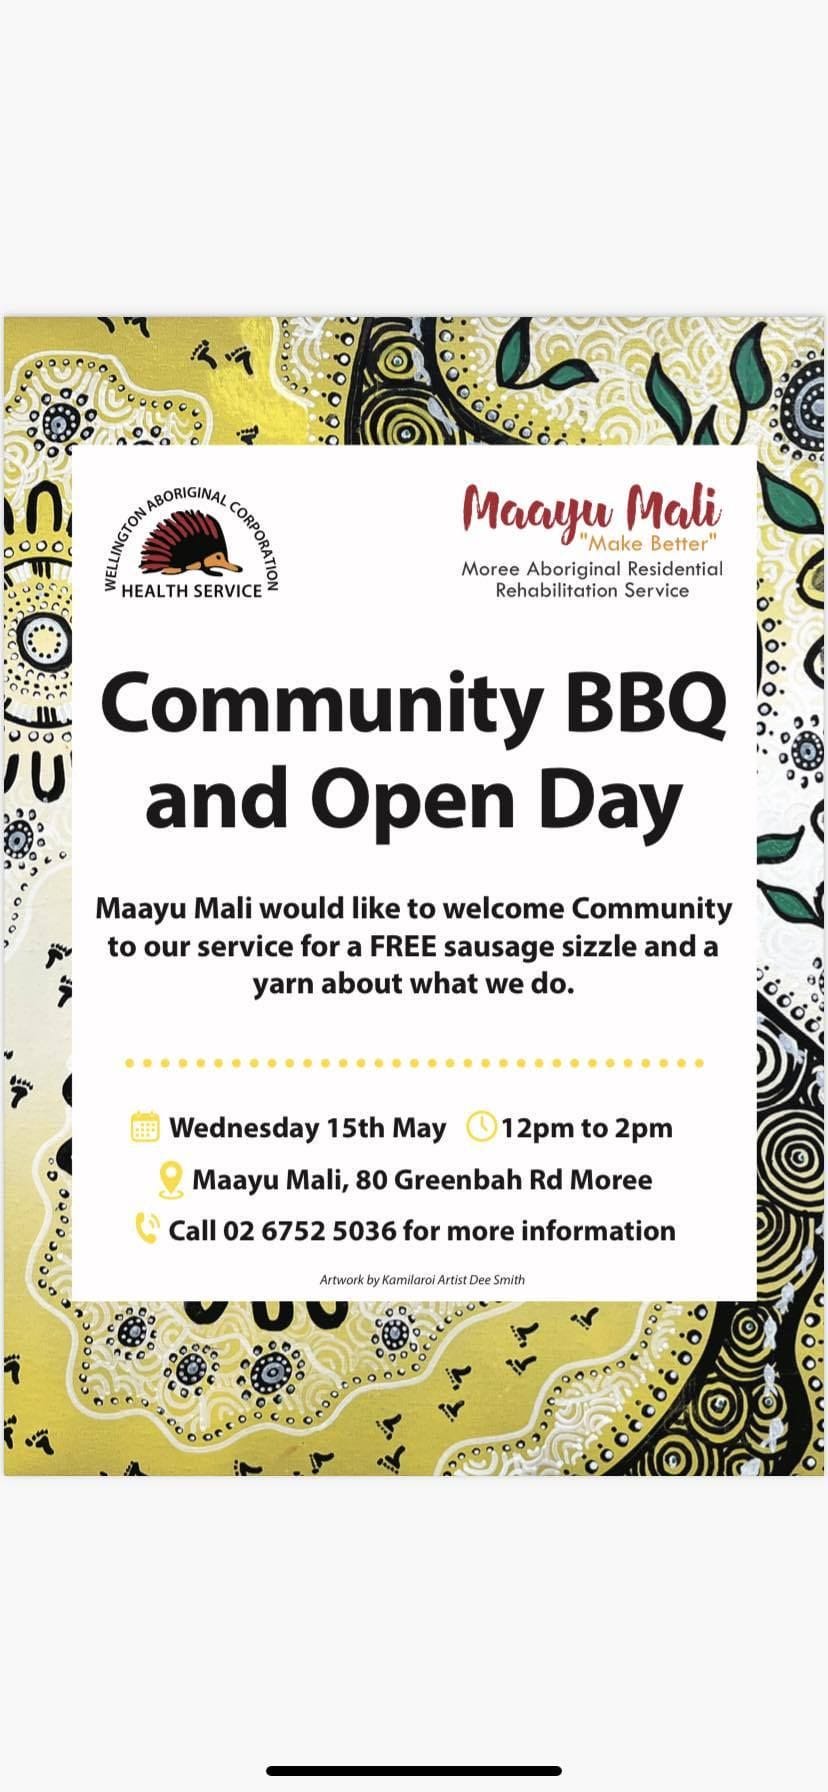 Maayu Mali - Community BBQ and Open Day